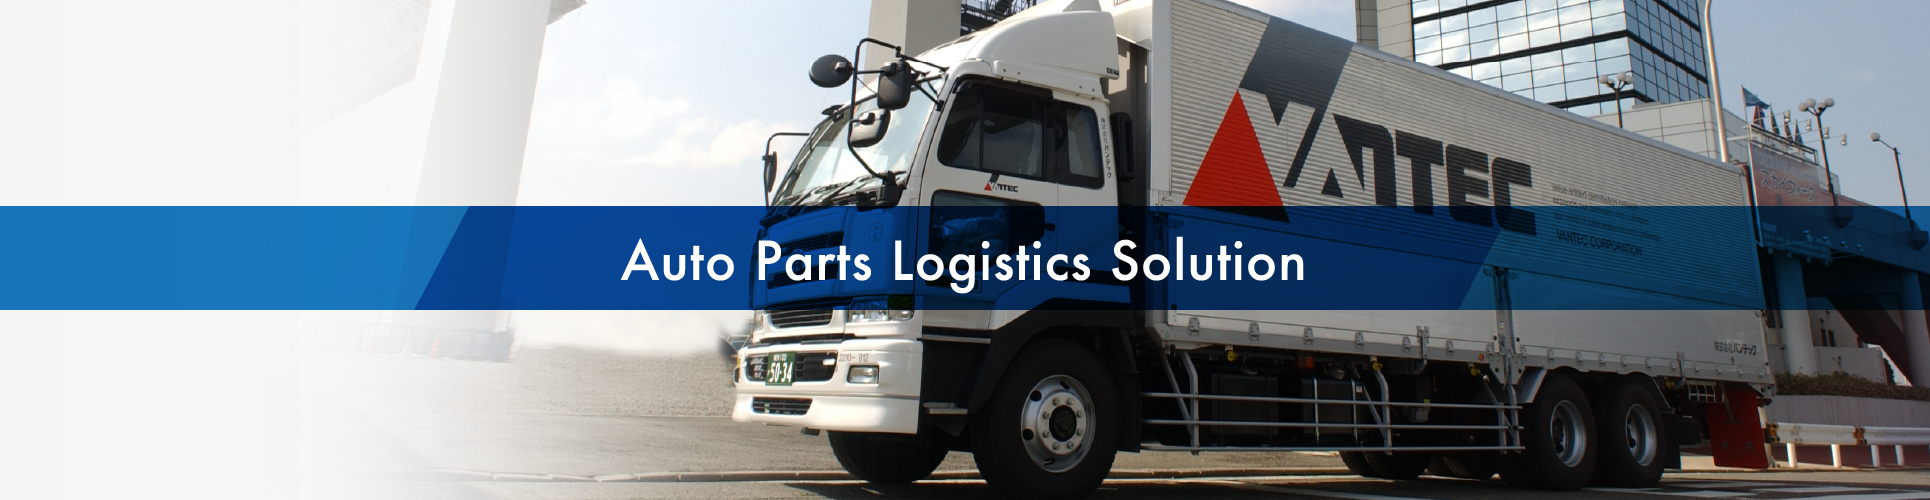 Auto Parts Logistics Solution